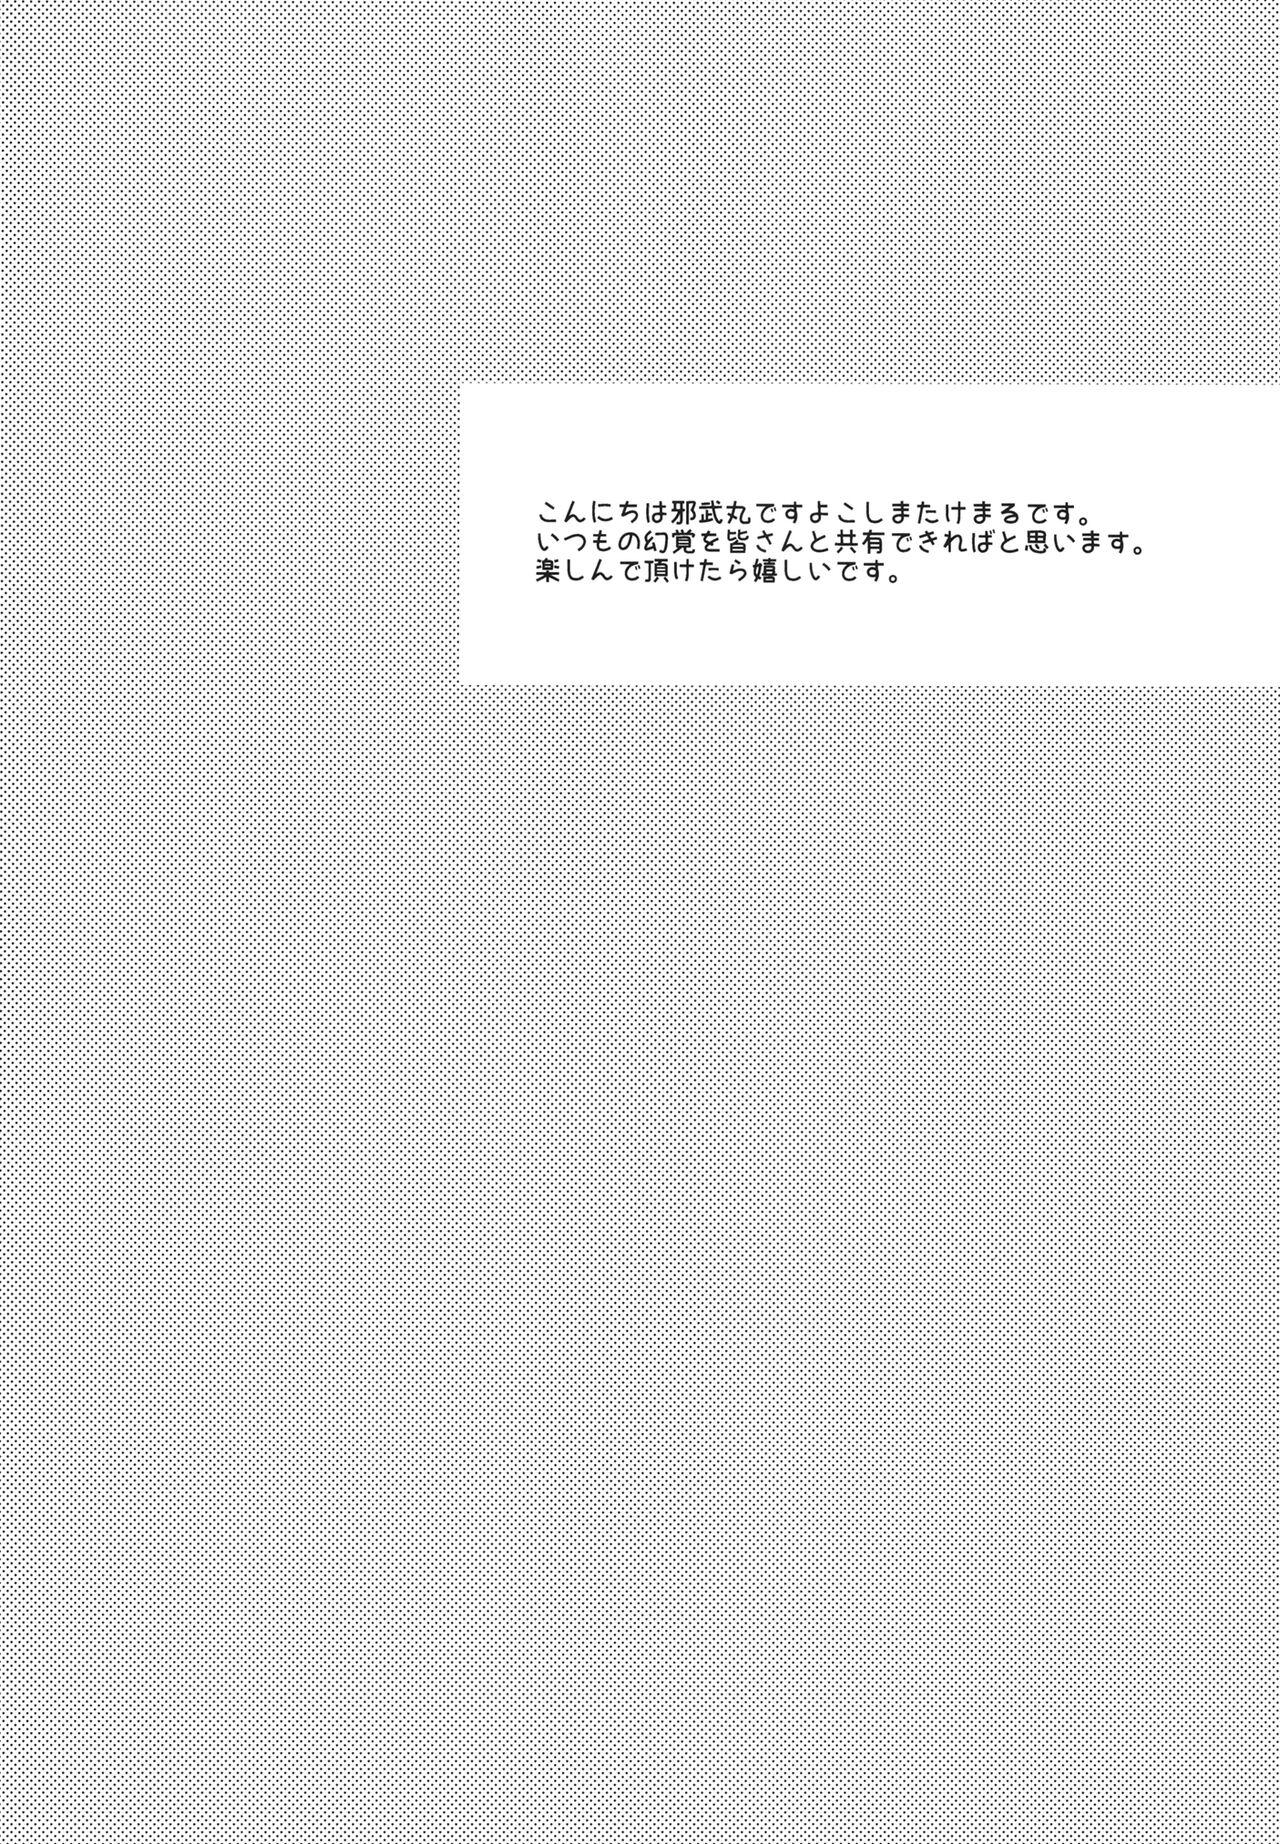 Red NISHIZUMI SHIMADA Iemoto ZERO - Girls und panzer Class Room - Page 3